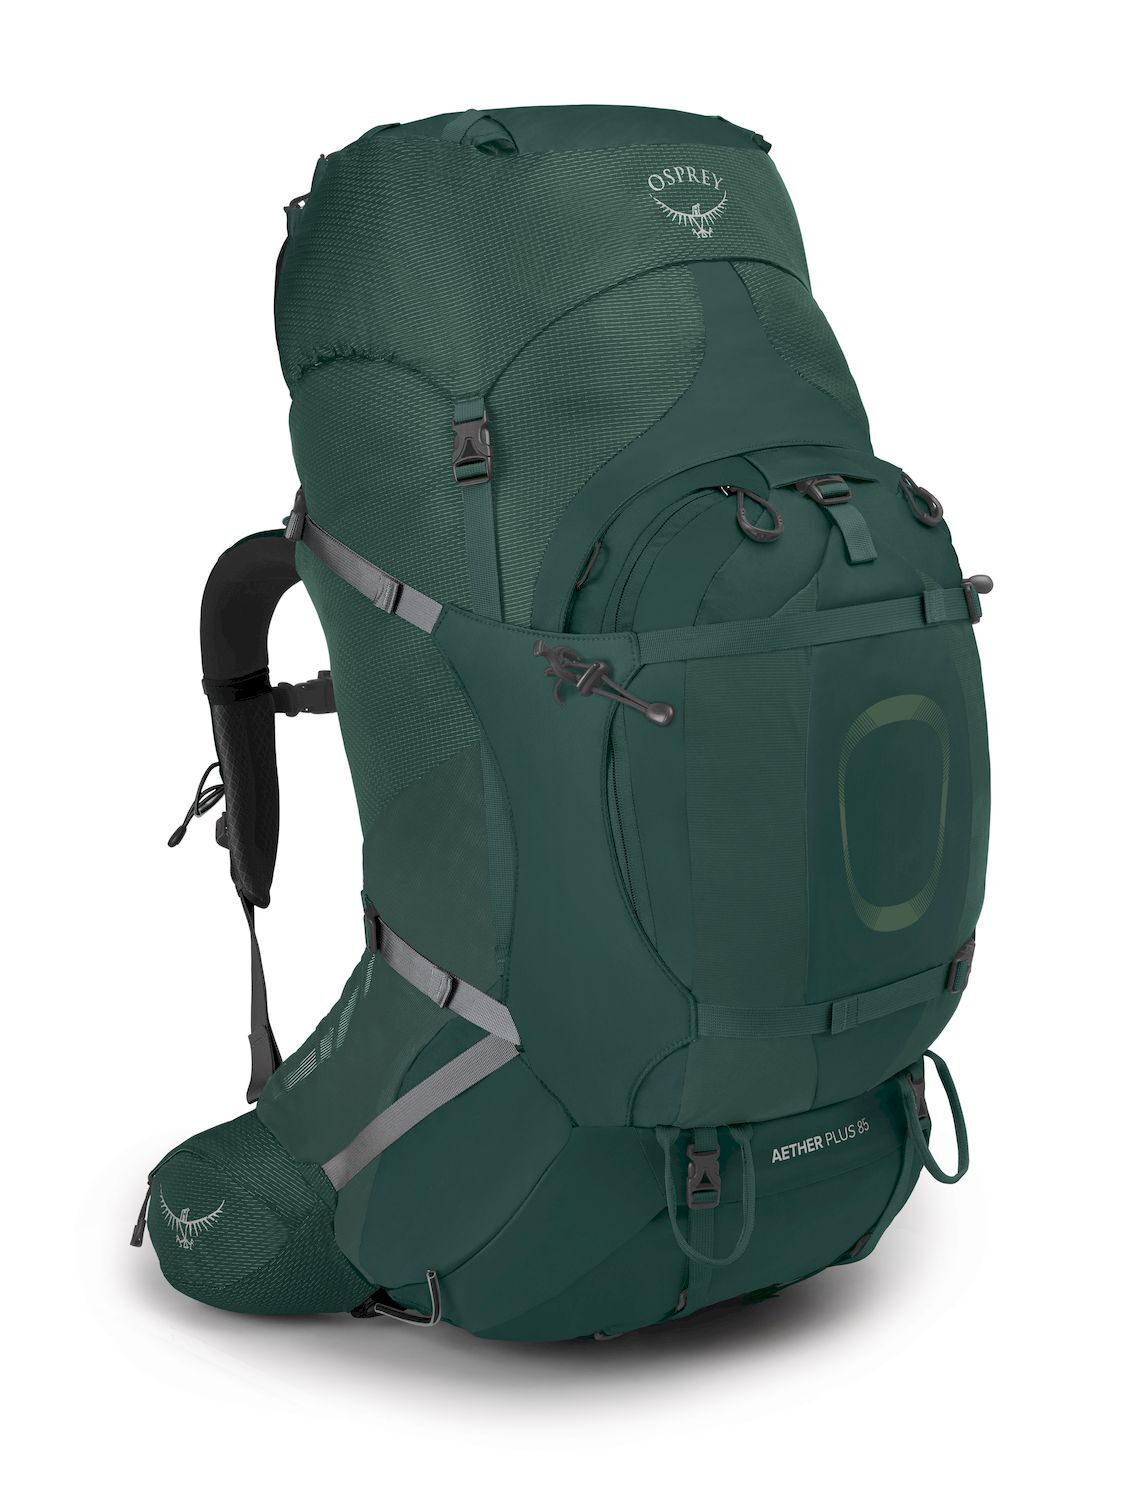 Osprey Aether Plus 85 - Hiking backpack - Men's